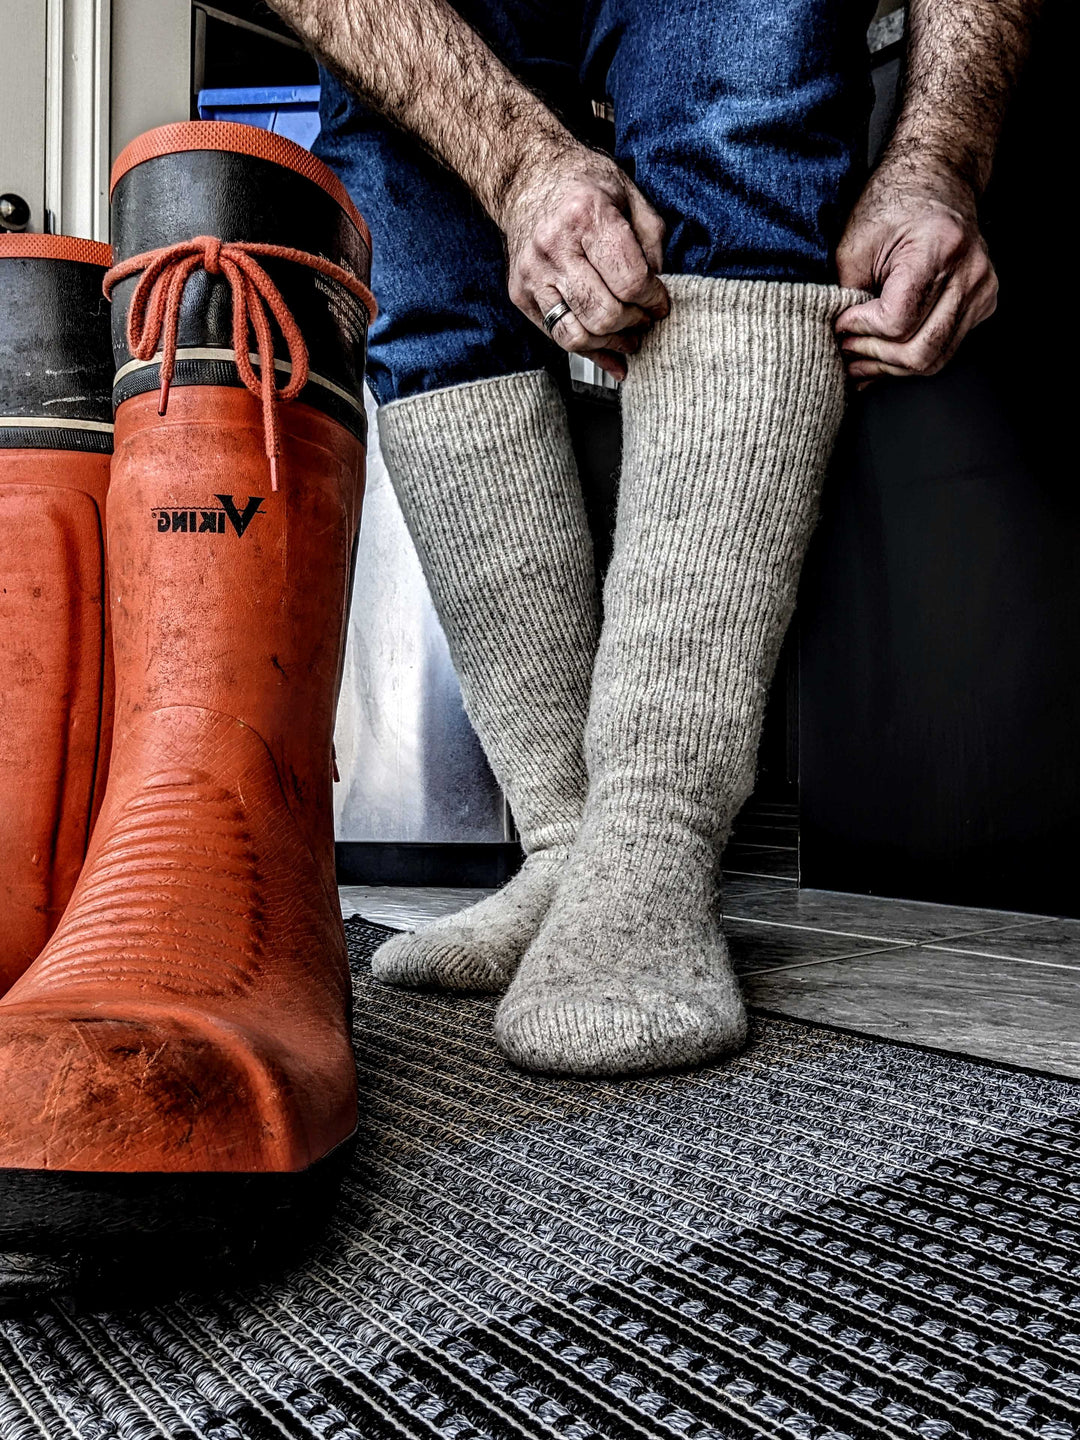 J.B. Field's Men's Icelandic 50 Below Gumboot Wool Thermal Sock